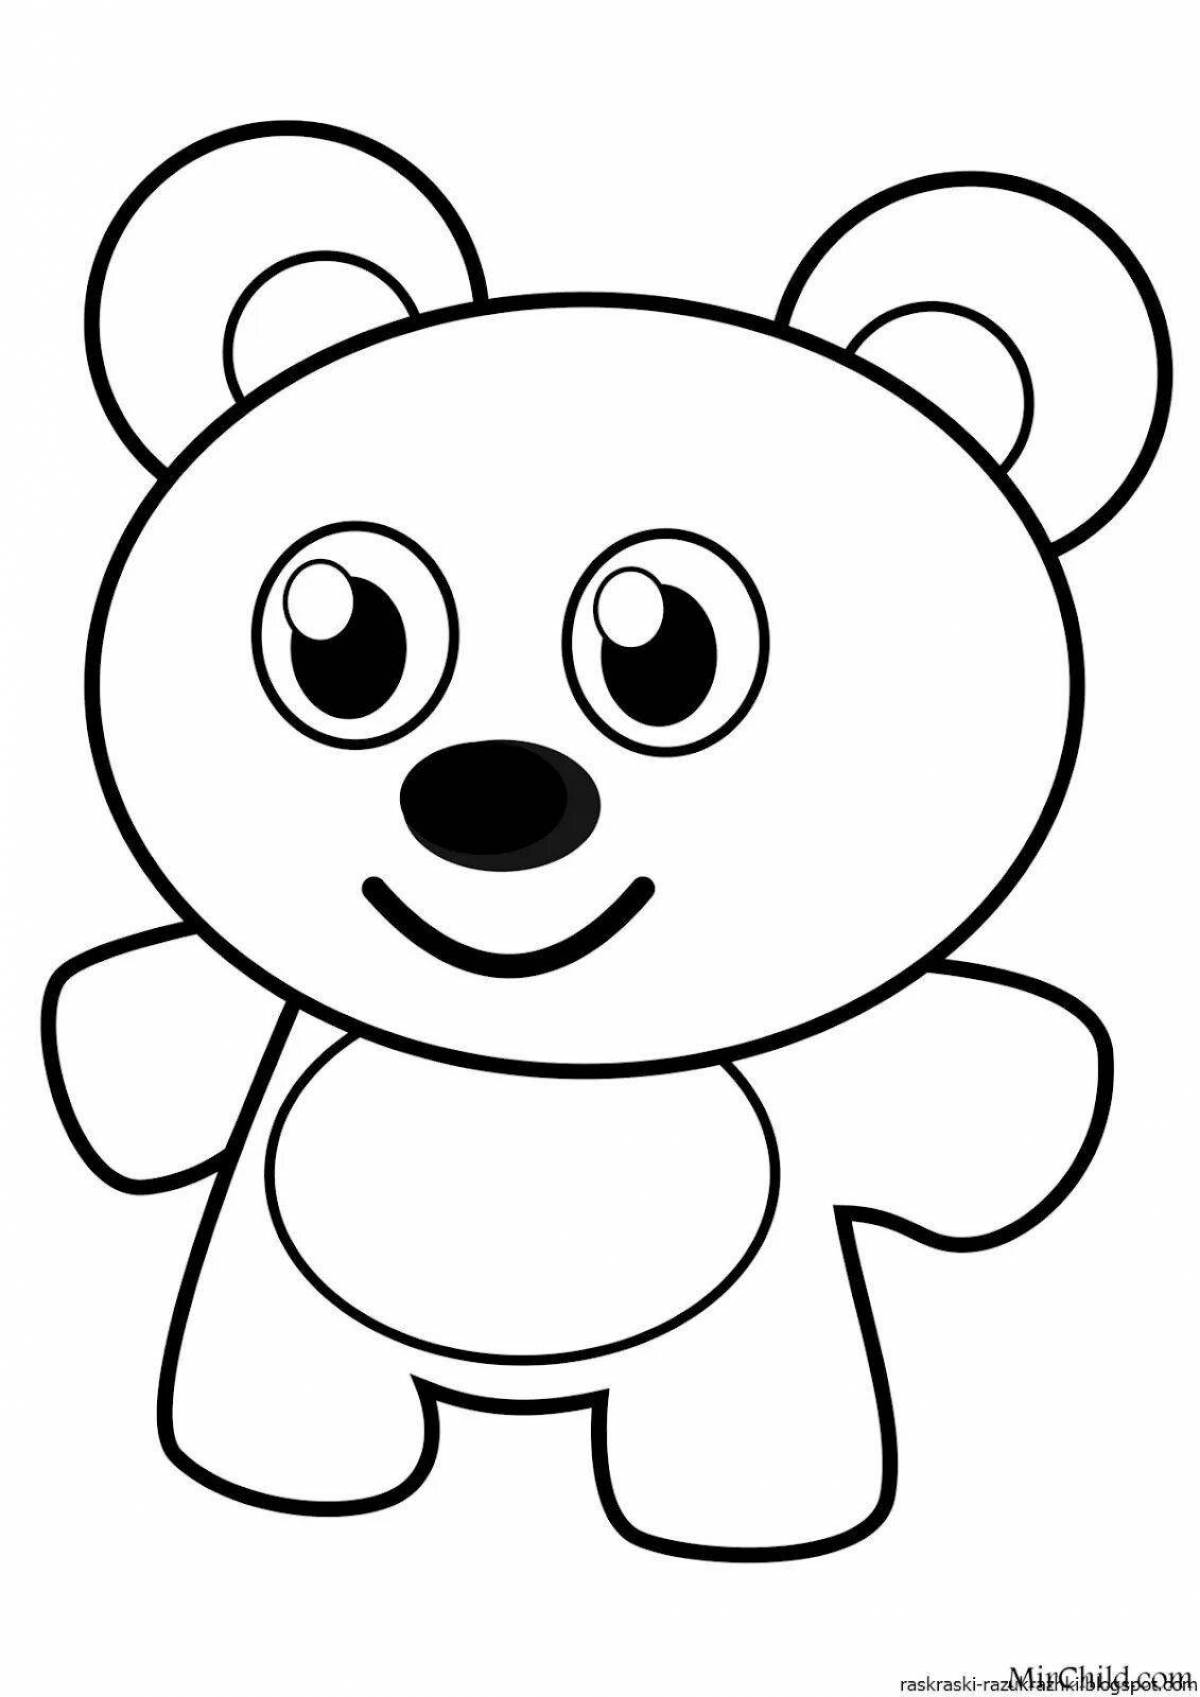 Color-happy coloring page large для детей 4-5 лет